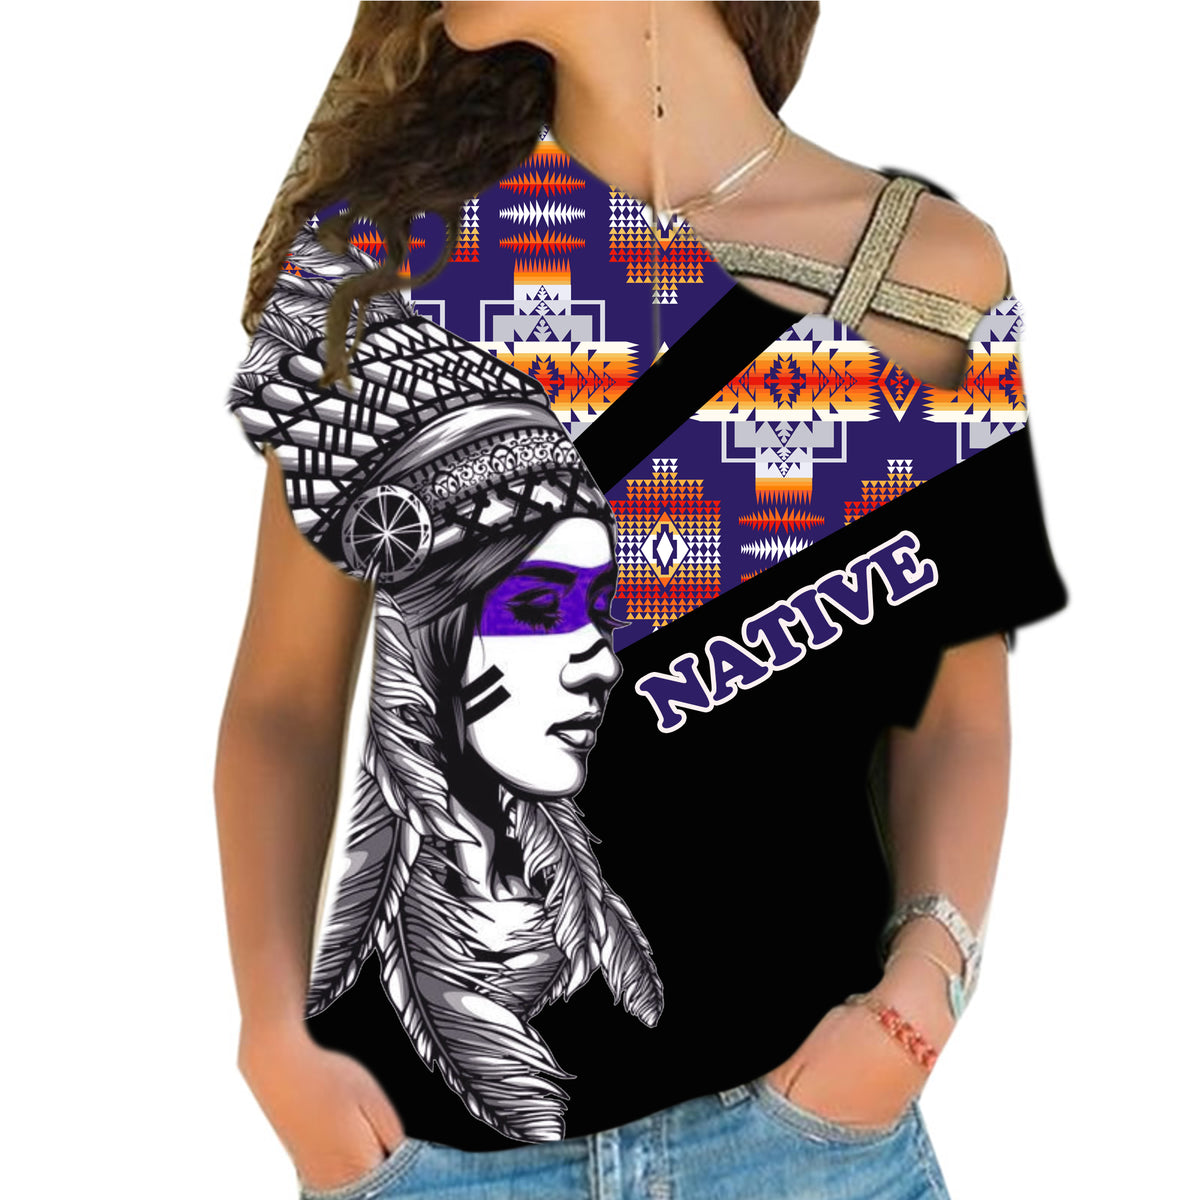 Powwow StoreCRS0001239 Native American Cross Shoulder Shirt